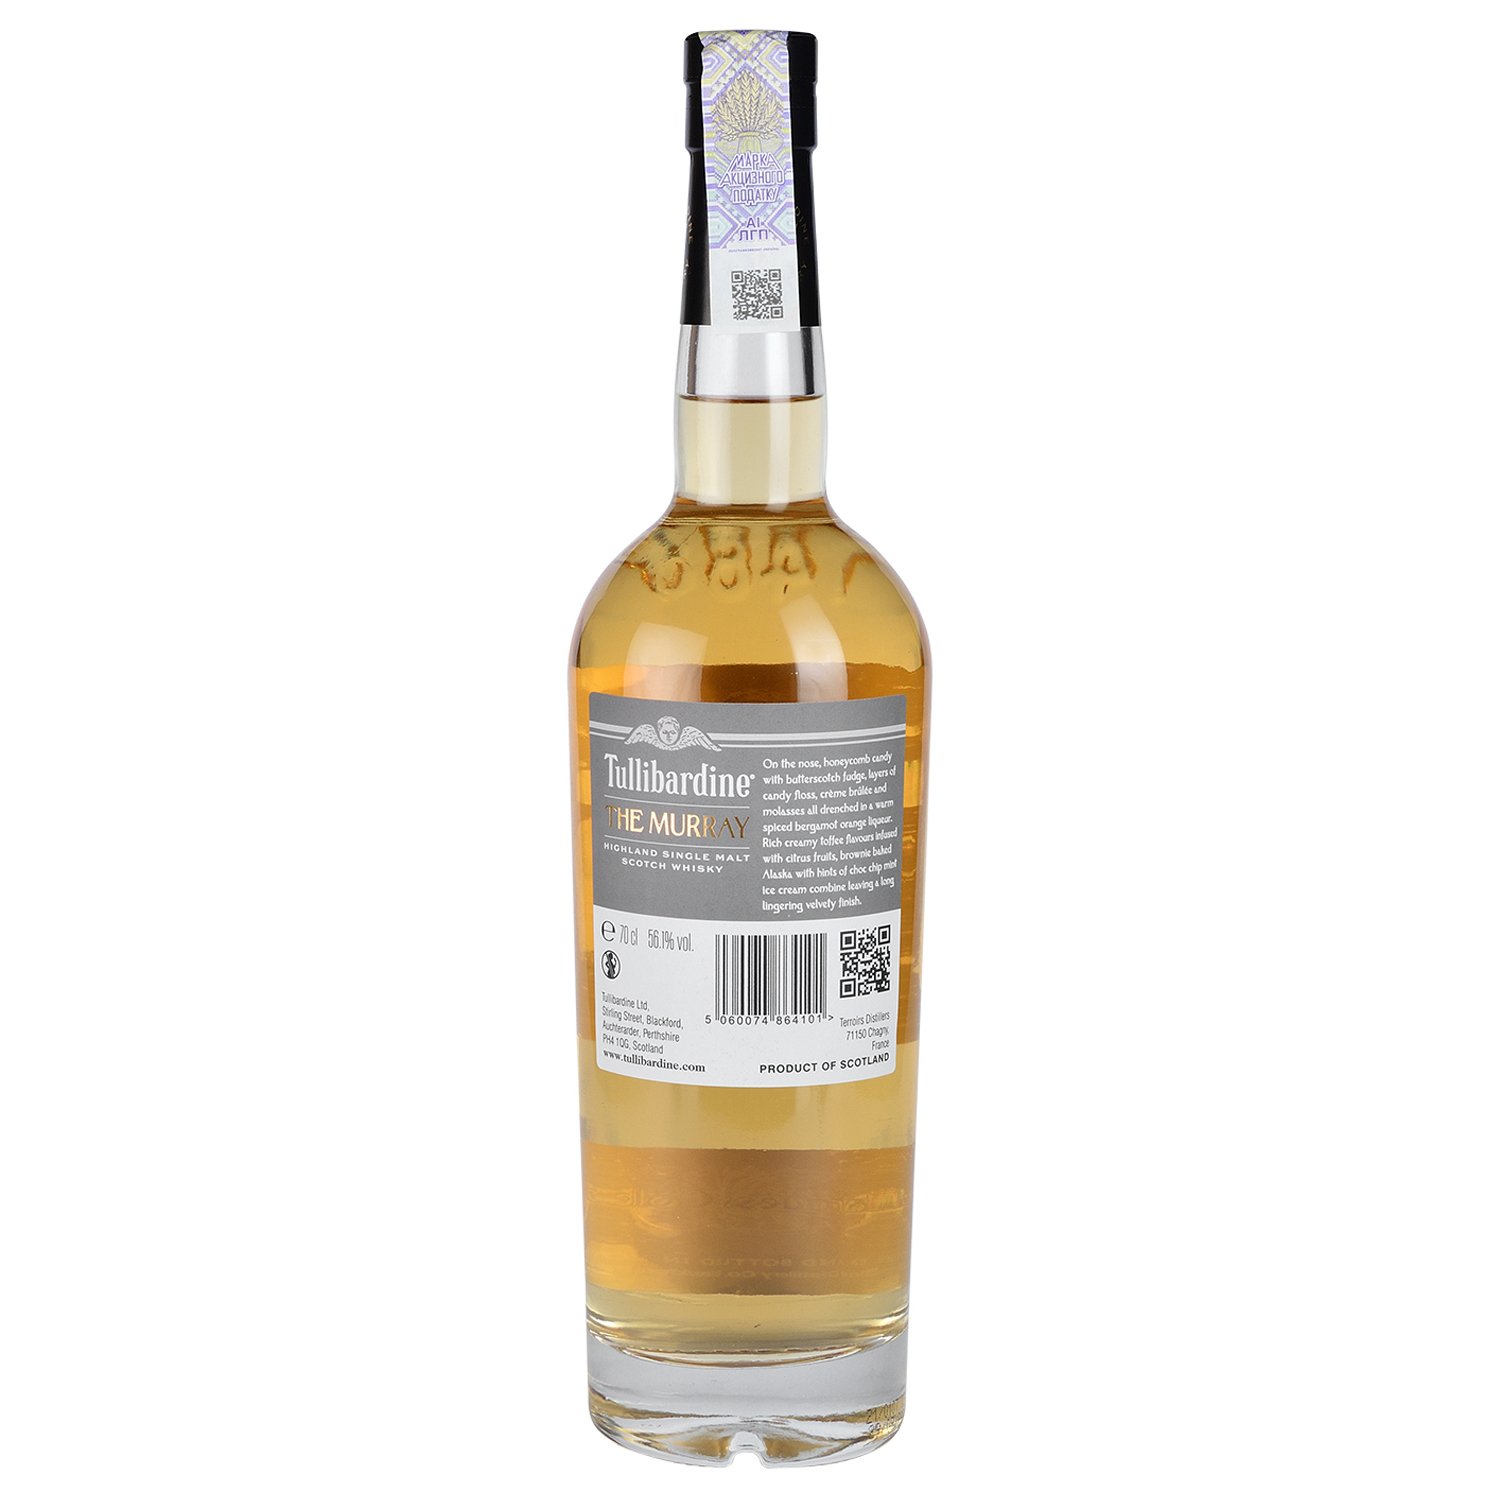 Виски Tullibardine The Murray Single Malt Scotch Whisky 2008 56.1% 0.7 л в подарочной упаковке - фото 3